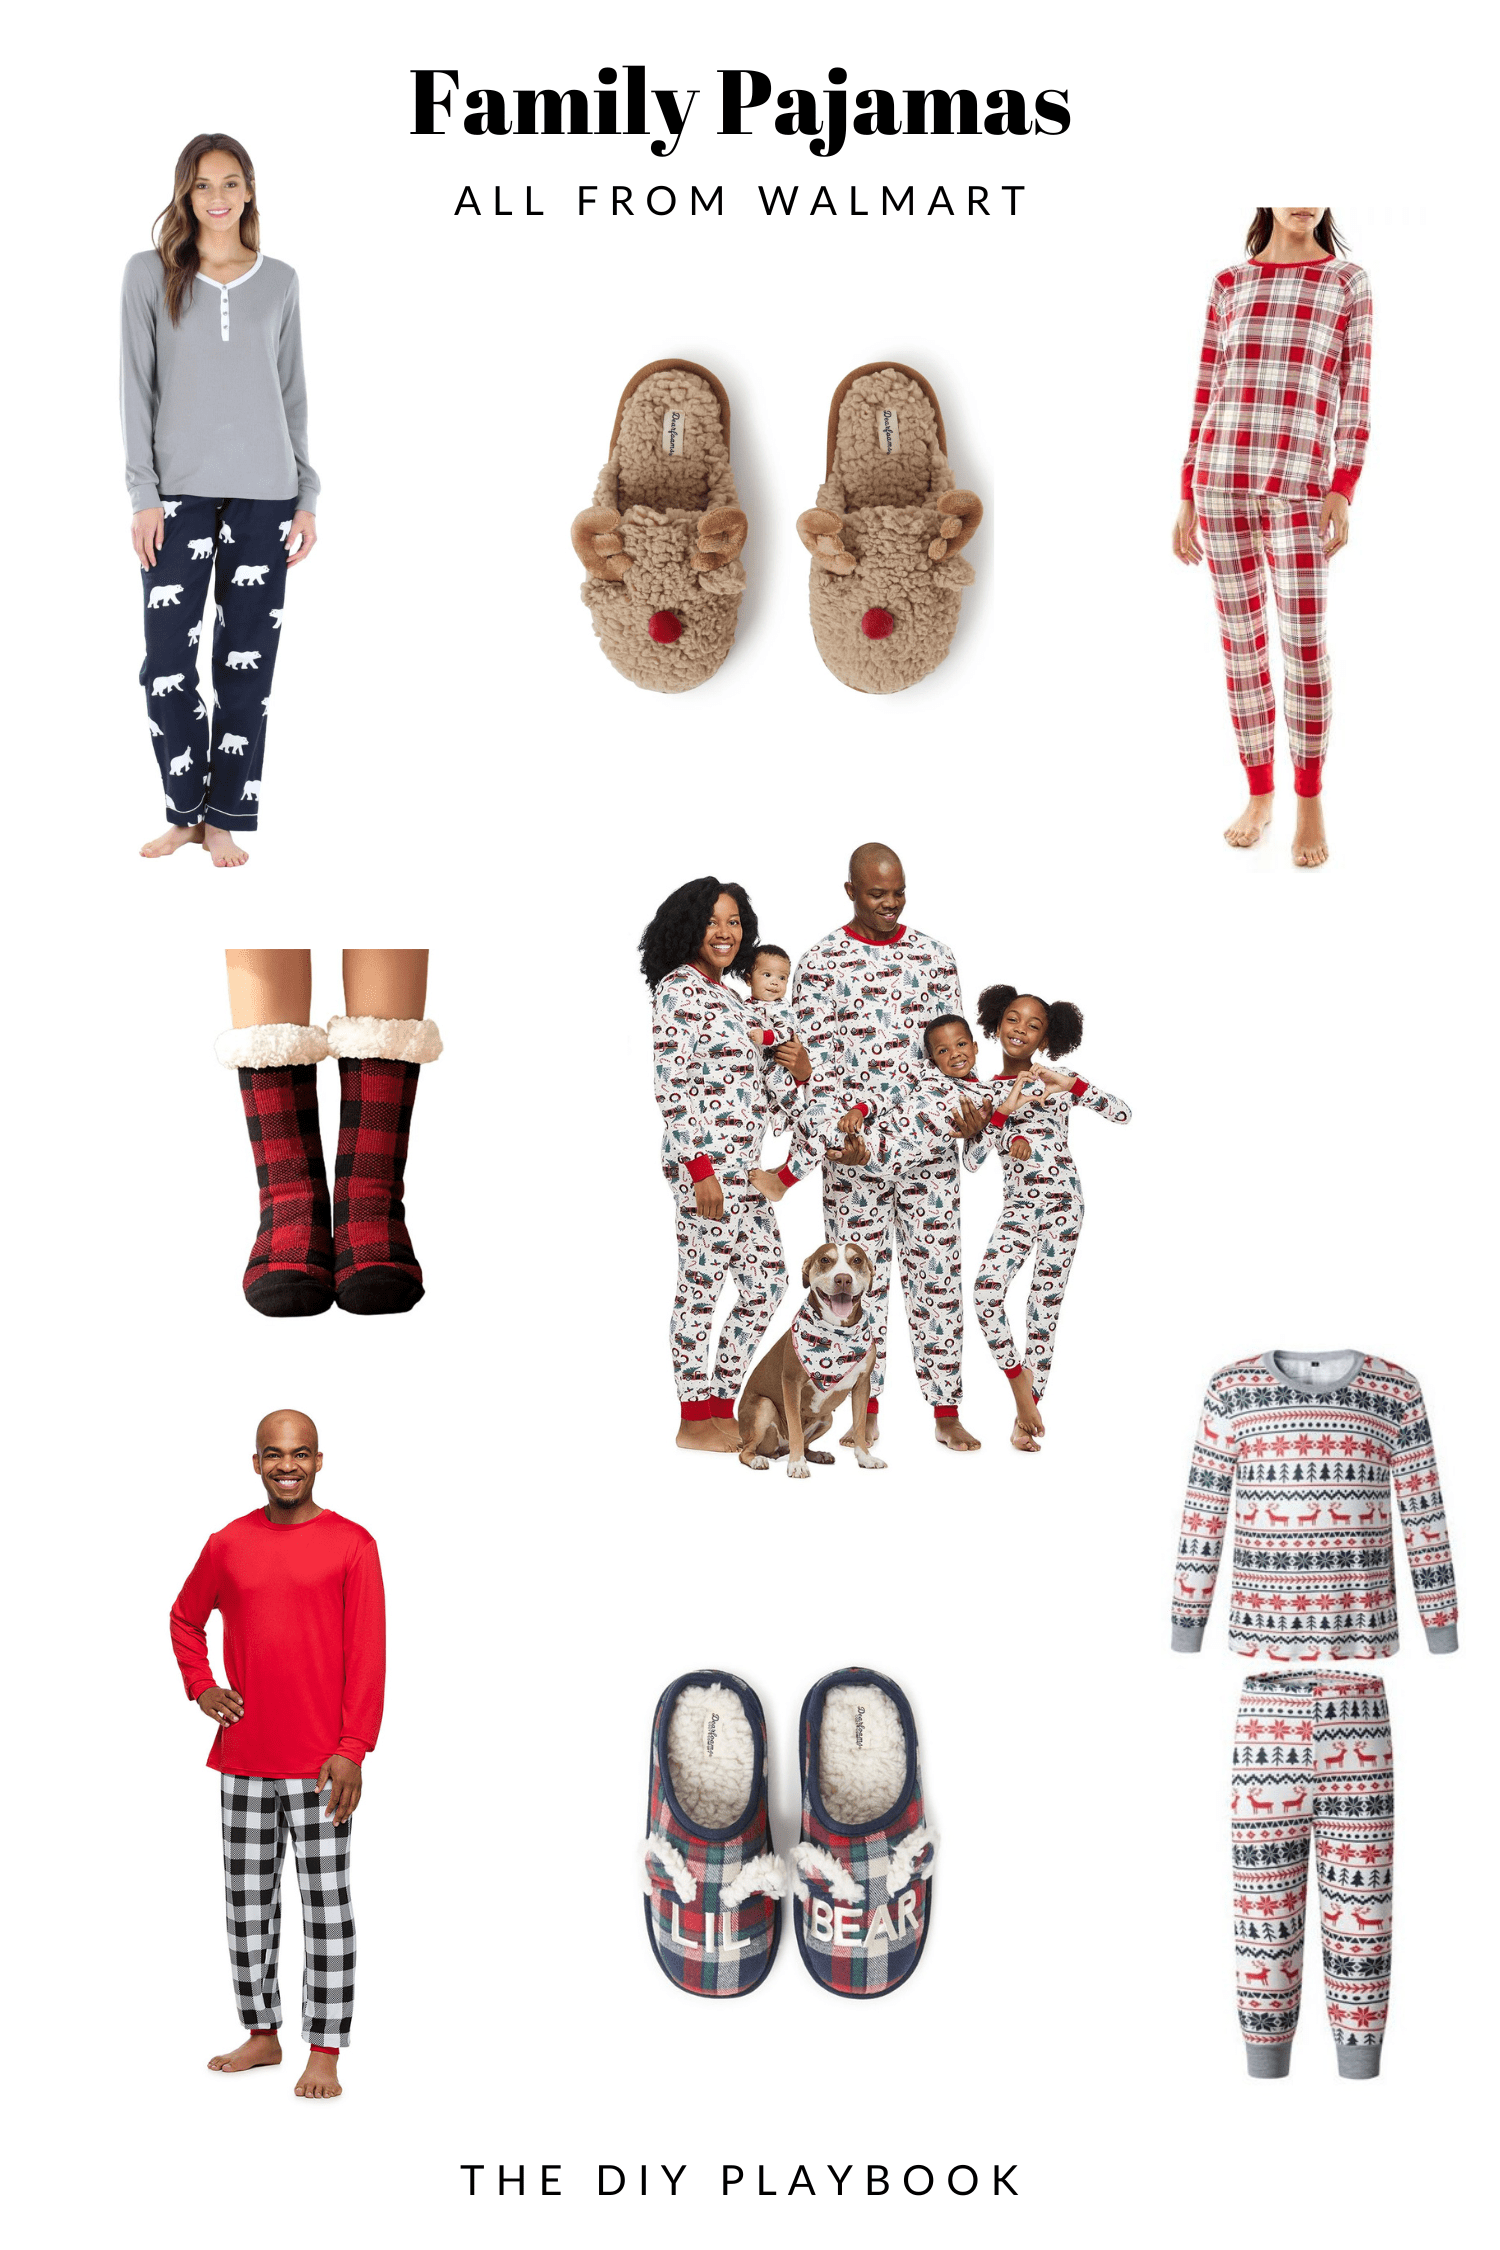 Walmart Fashion - Christmas pajamas for the entire family